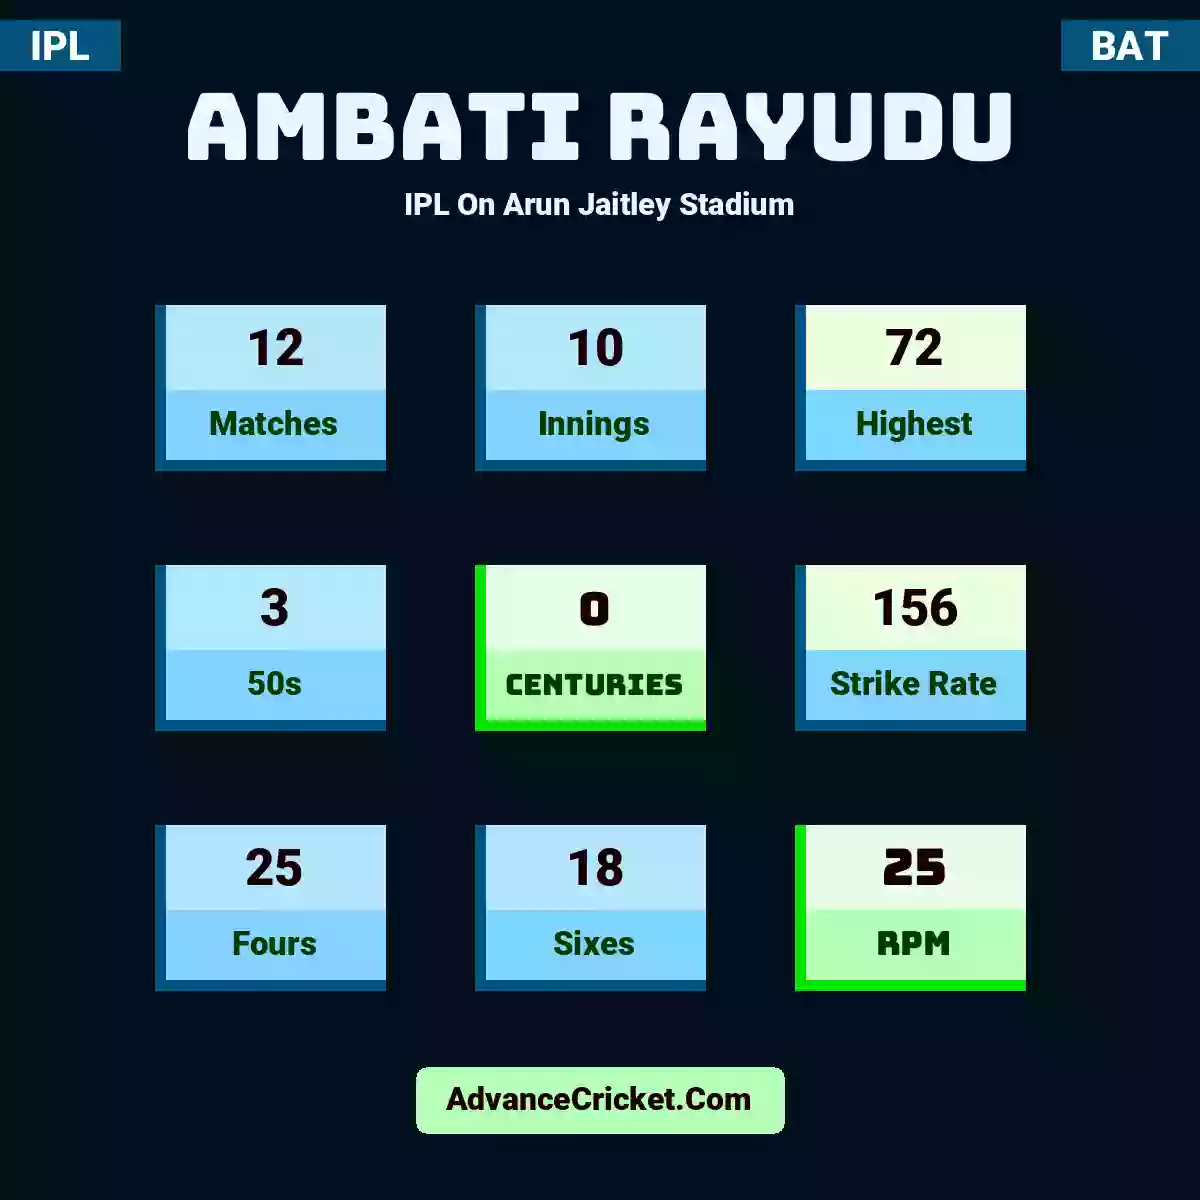 Ambati Rayudu IPL  On Arun Jaitley Stadium, Ambati Rayudu played 12 matches, scored 72 runs as highest, 3 half-centuries, and 0 centuries, with a strike rate of 156. A.Rayudu hit 25 fours and 18 sixes, with an RPM of 25.